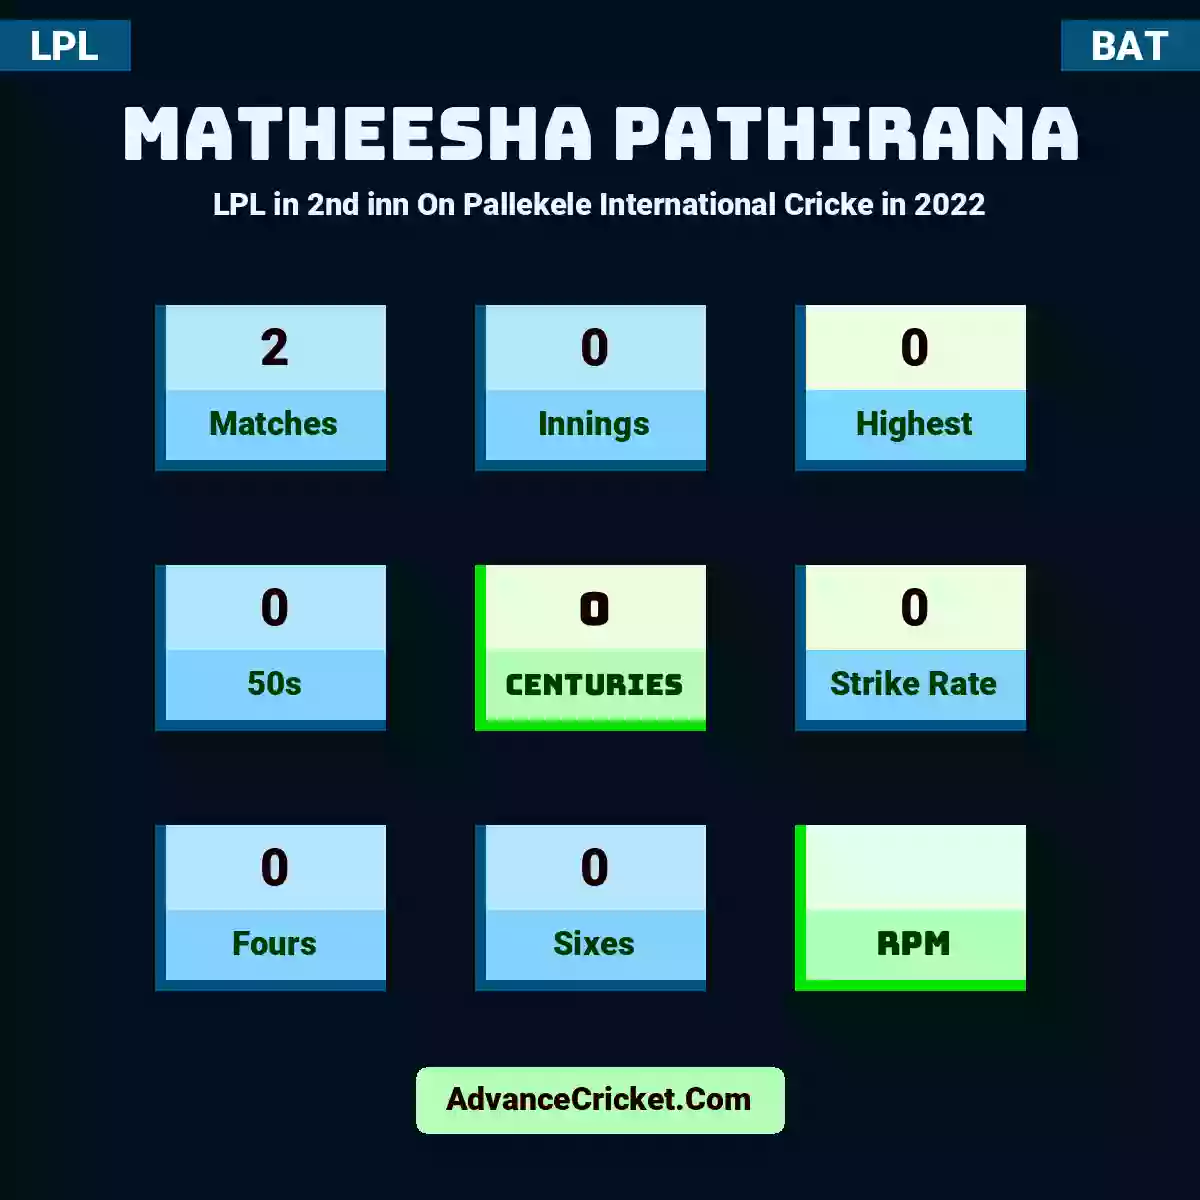 Matheesha Pathirana LPL  in 2nd inn On Pallekele International Cricke in 2022, Matheesha Pathirana played 2 matches, scored 0 runs as highest, 0 half-centuries, and 0 centuries, with a strike rate of 0. M.Pathirana hit 0 fours and 0 sixes.